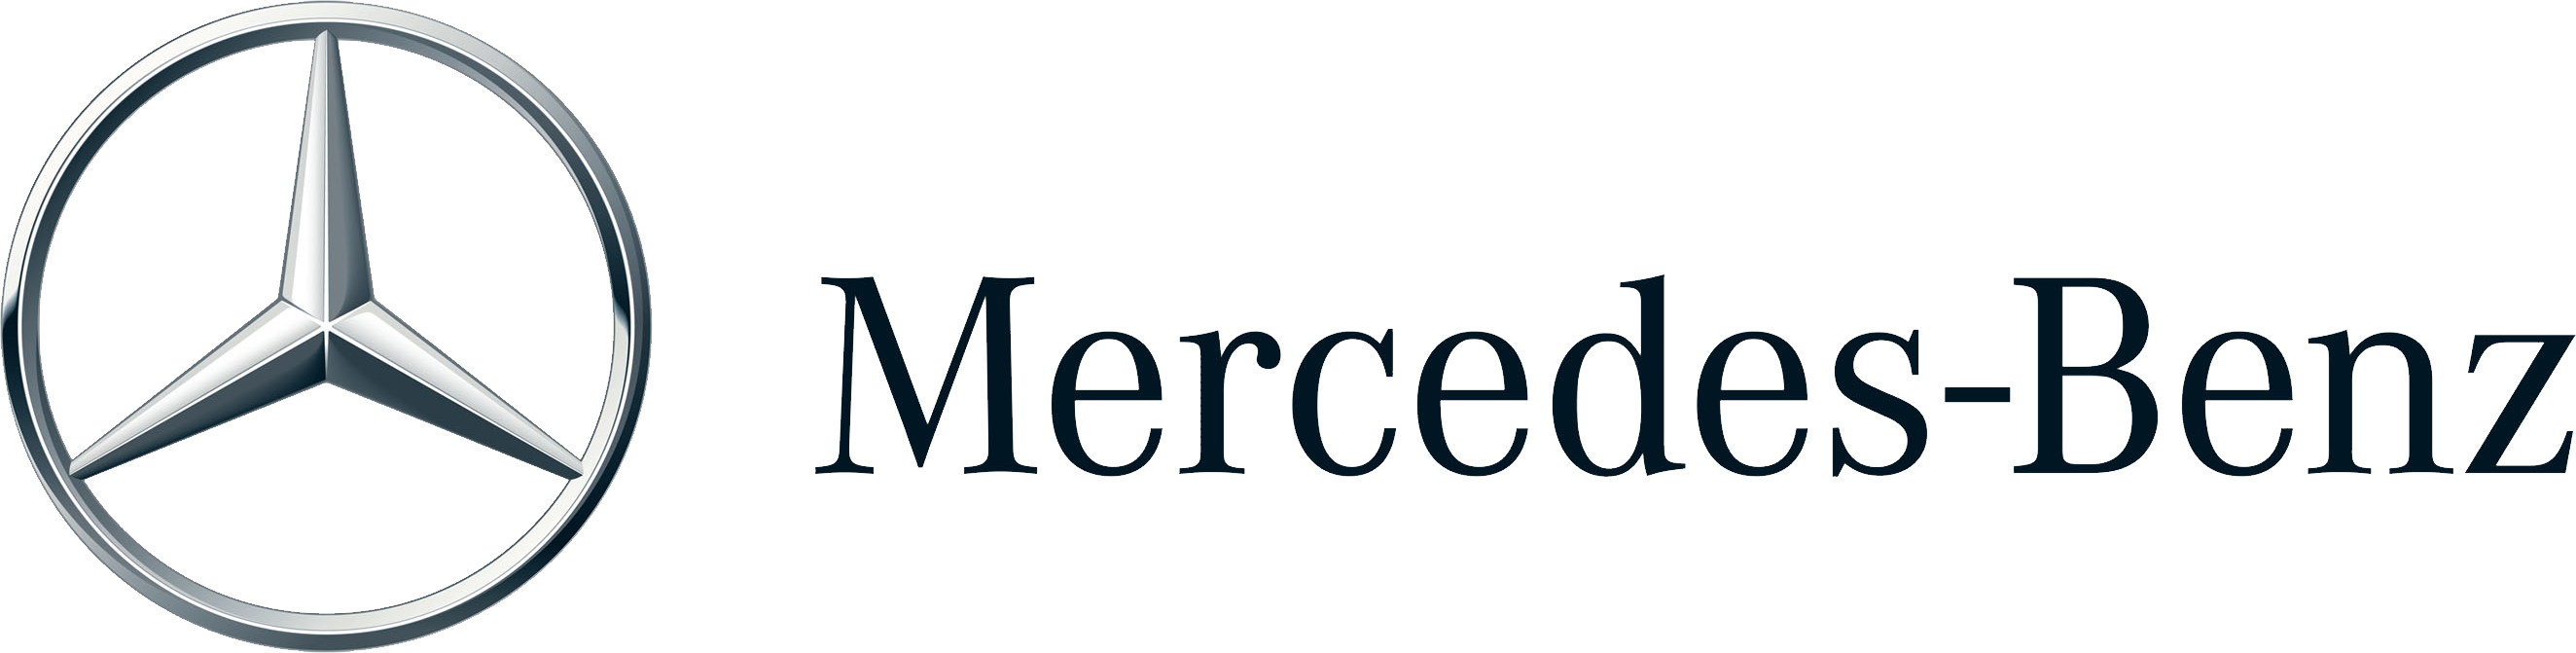 Mercedes-Benz logo imagen Transparente